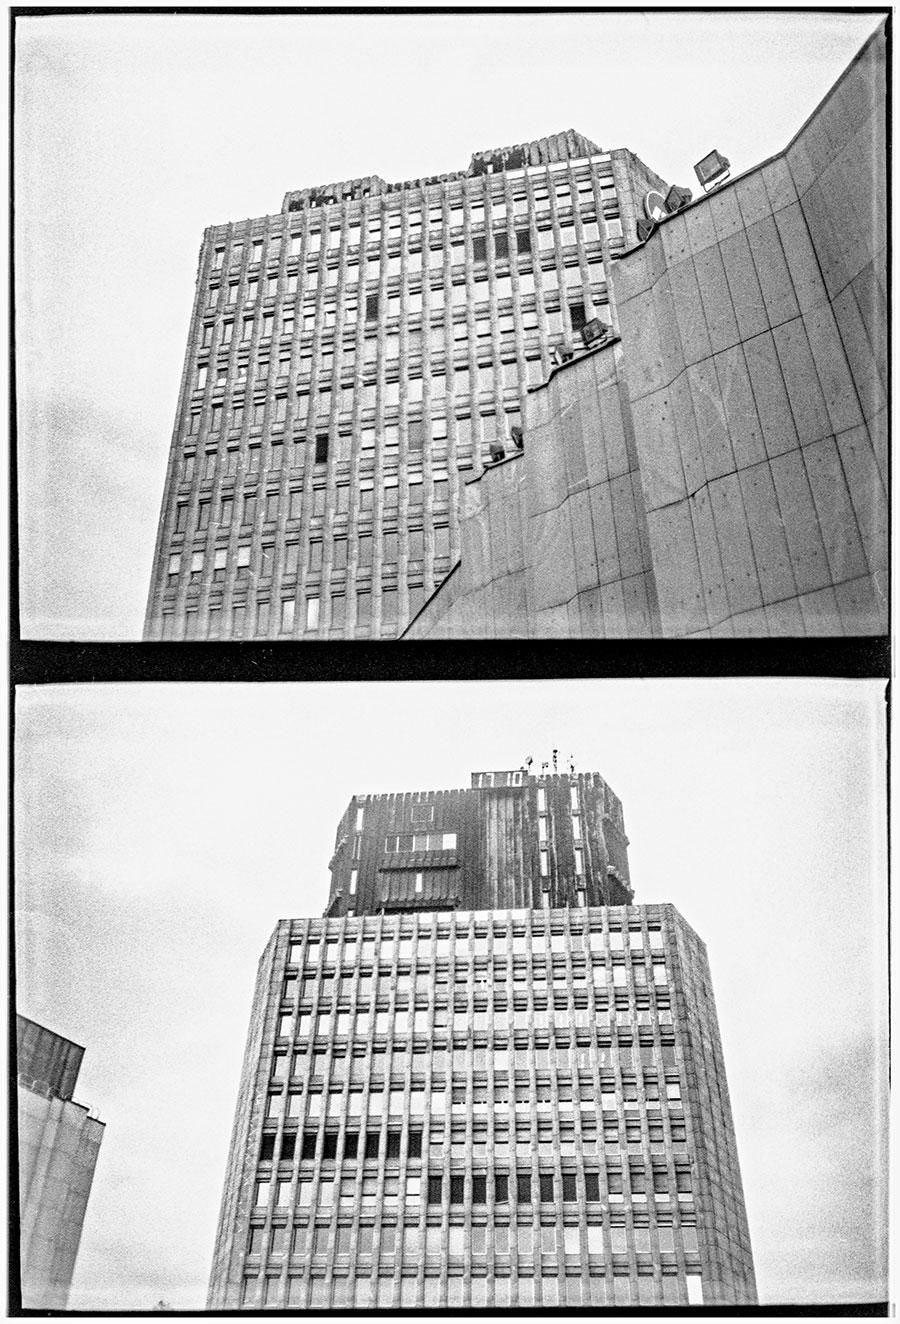 ljubljana-brutalismus5-parlament-analogefotografie-antjekroeger